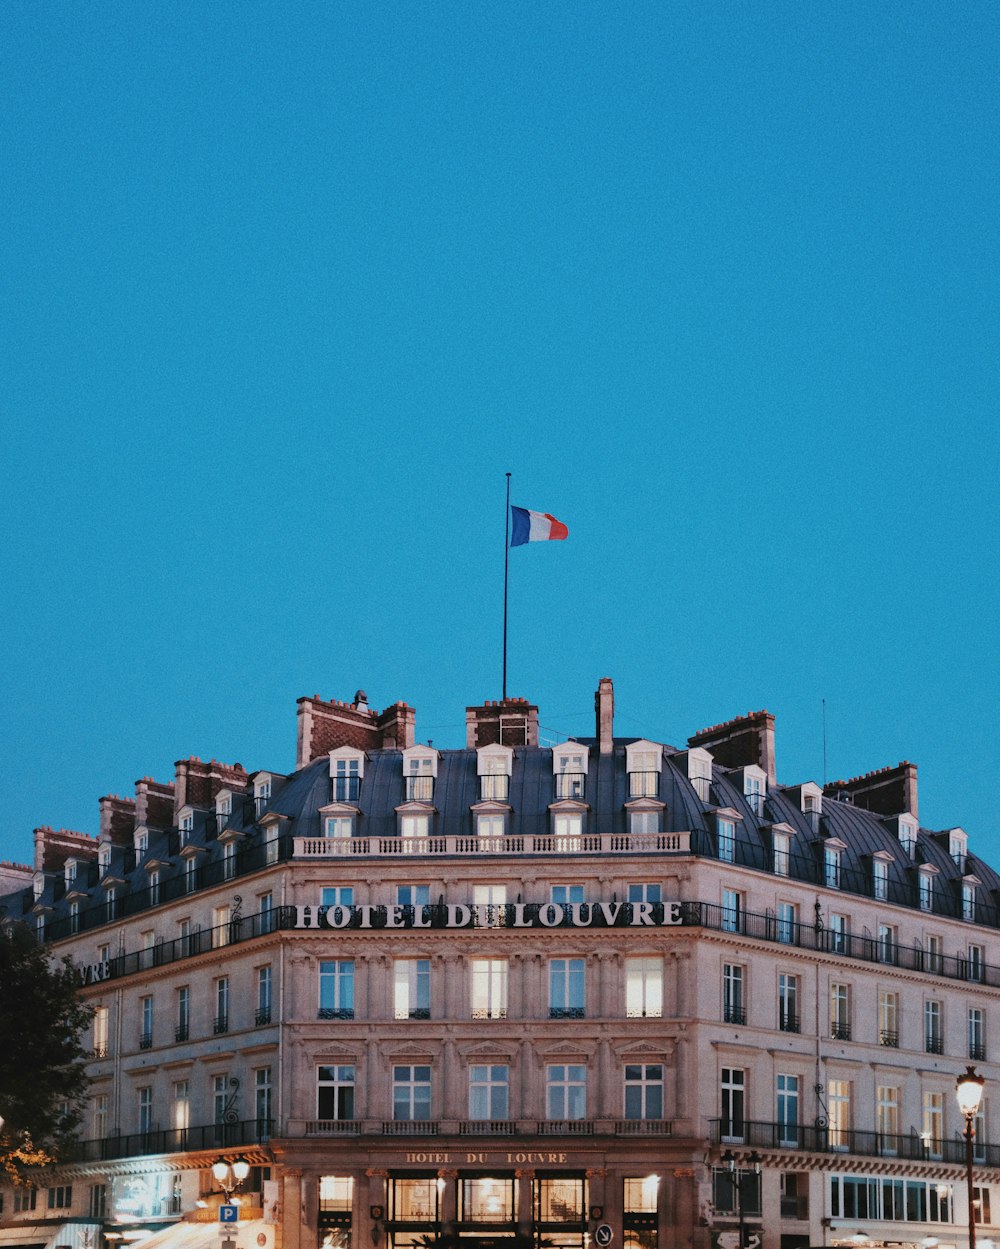 Hotel Du Louvre building under clear blue sky